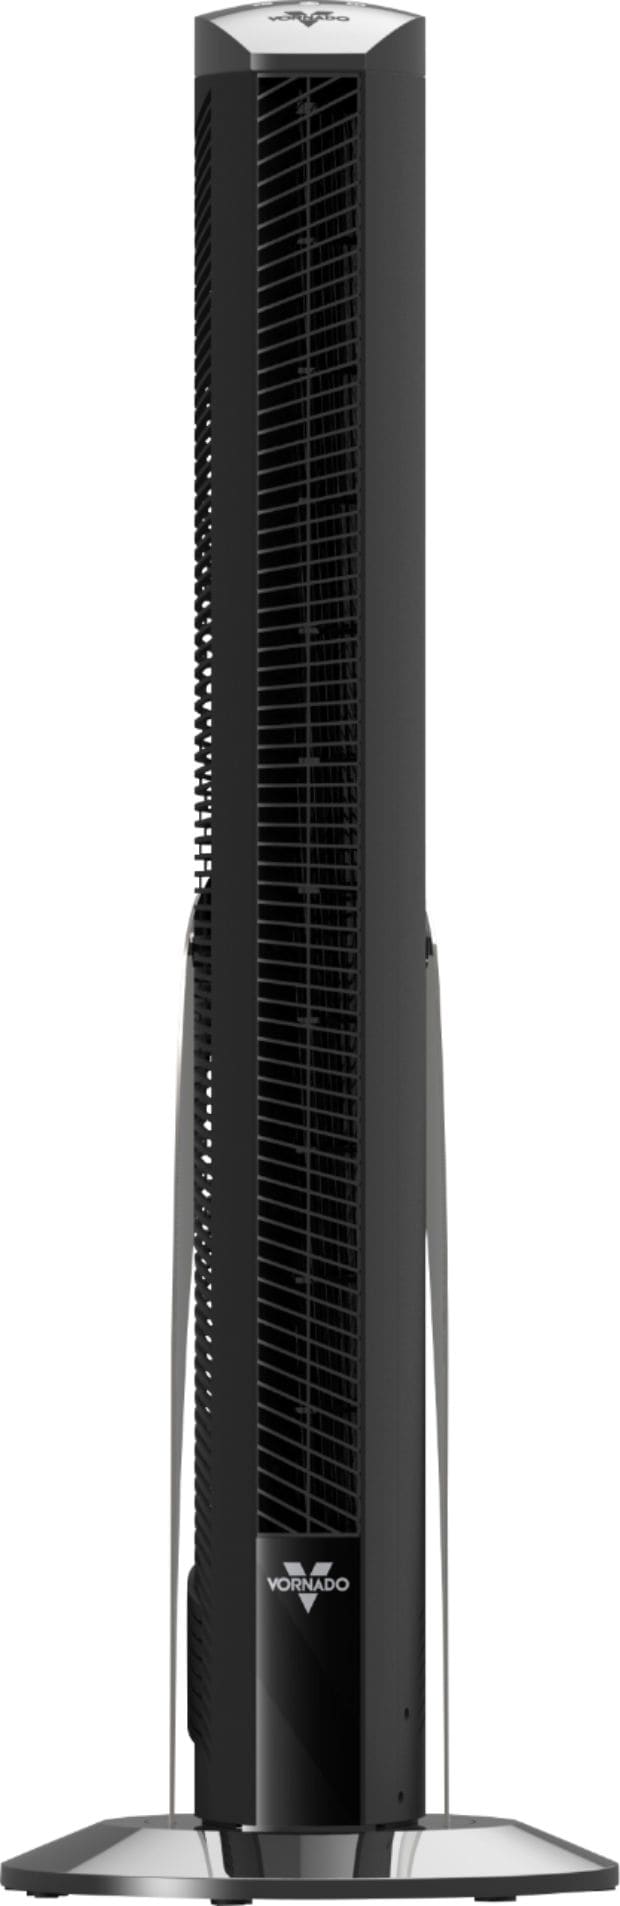 Vornado - OSCR37 Oscillating Tower Fan with Remote - Black_0